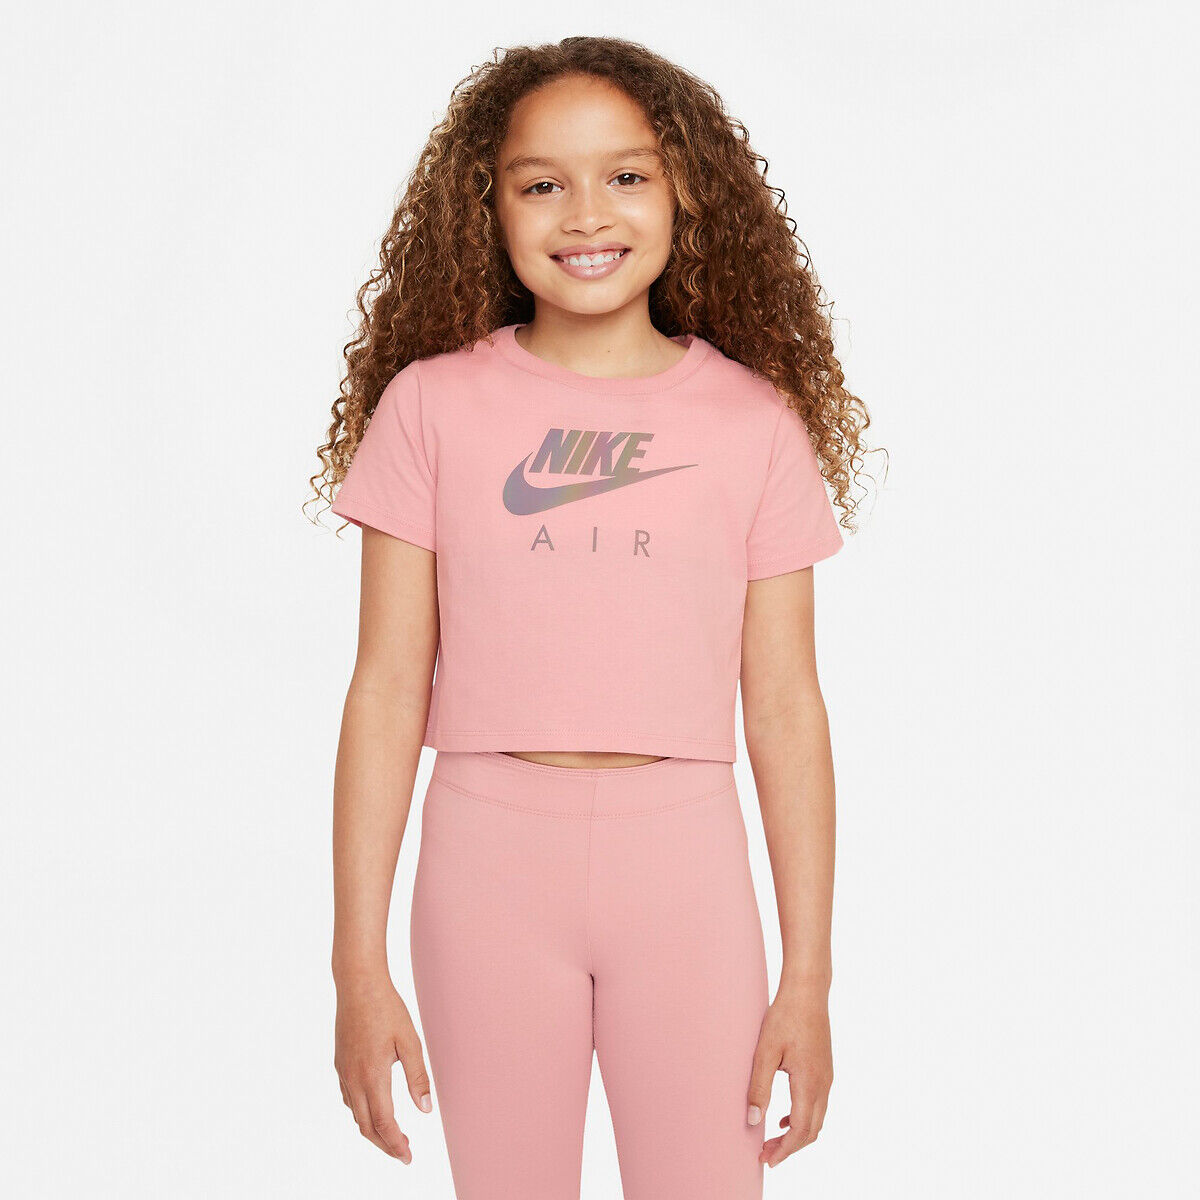 NIKE T-Shirt Nike Air in Cropped-Länge, 7-15 Jahre SCHWARZ;ROSA